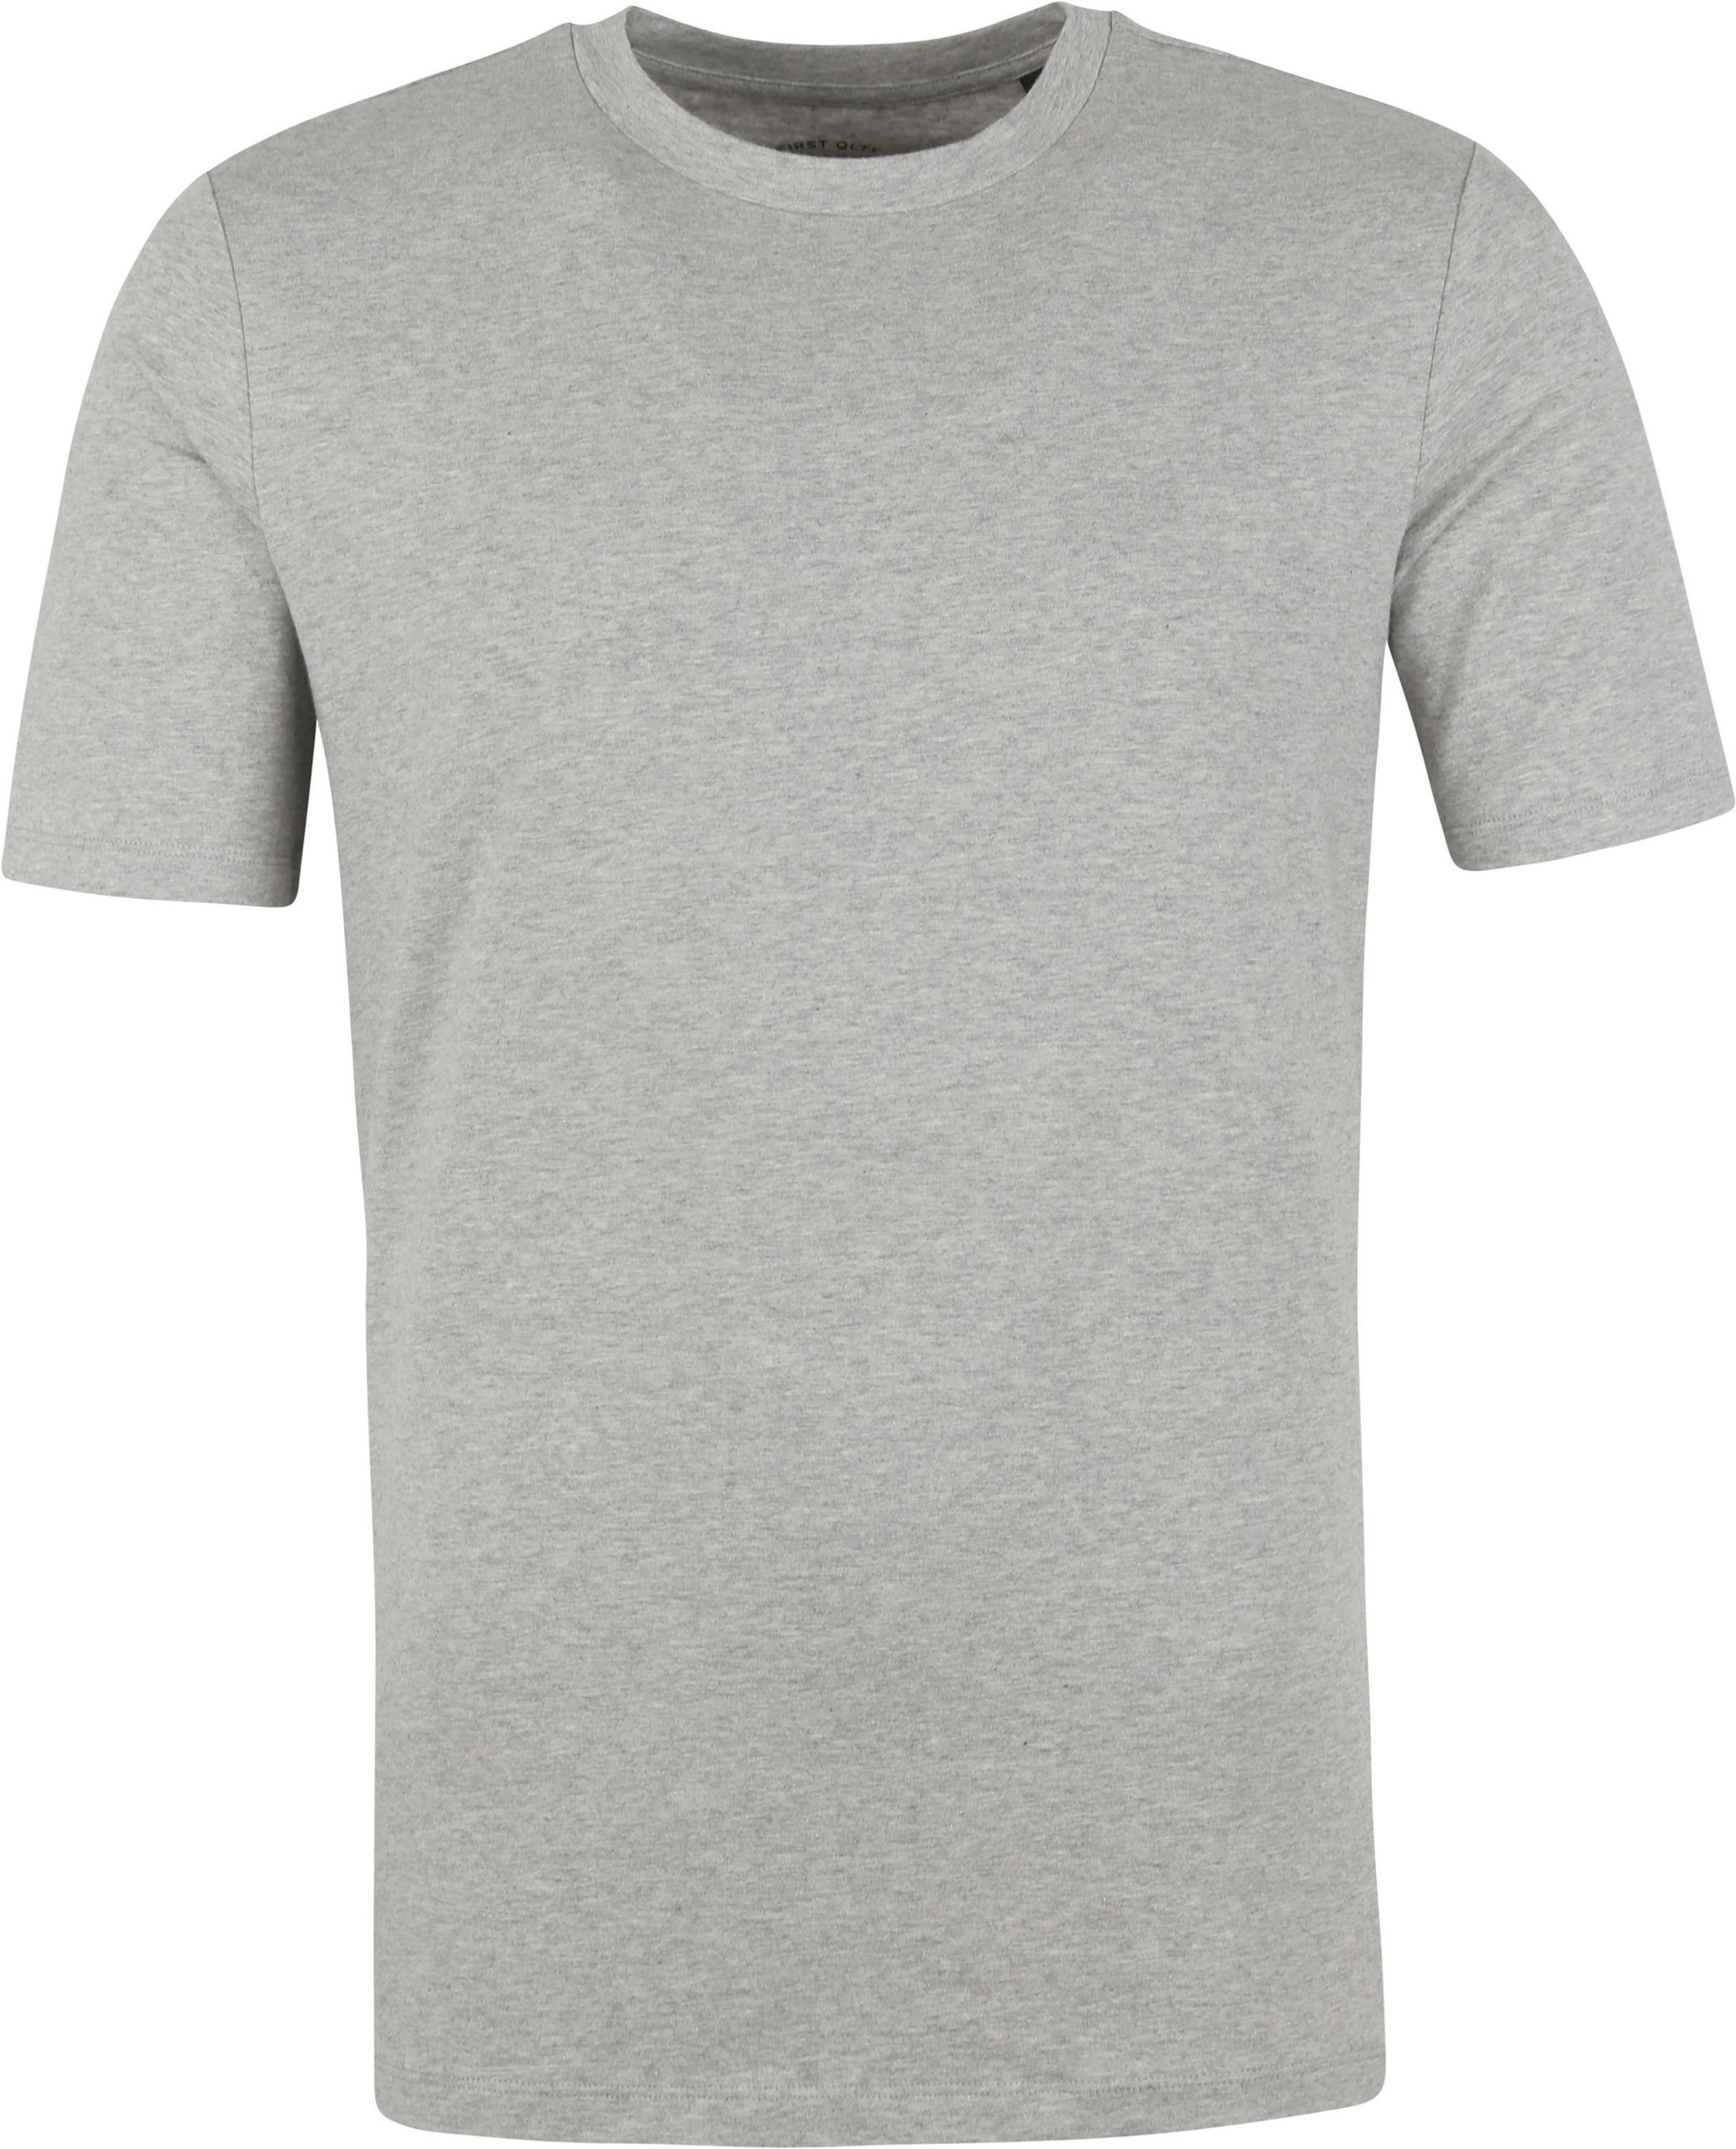 Scotch & Soda T Shirt Classic Grey size L